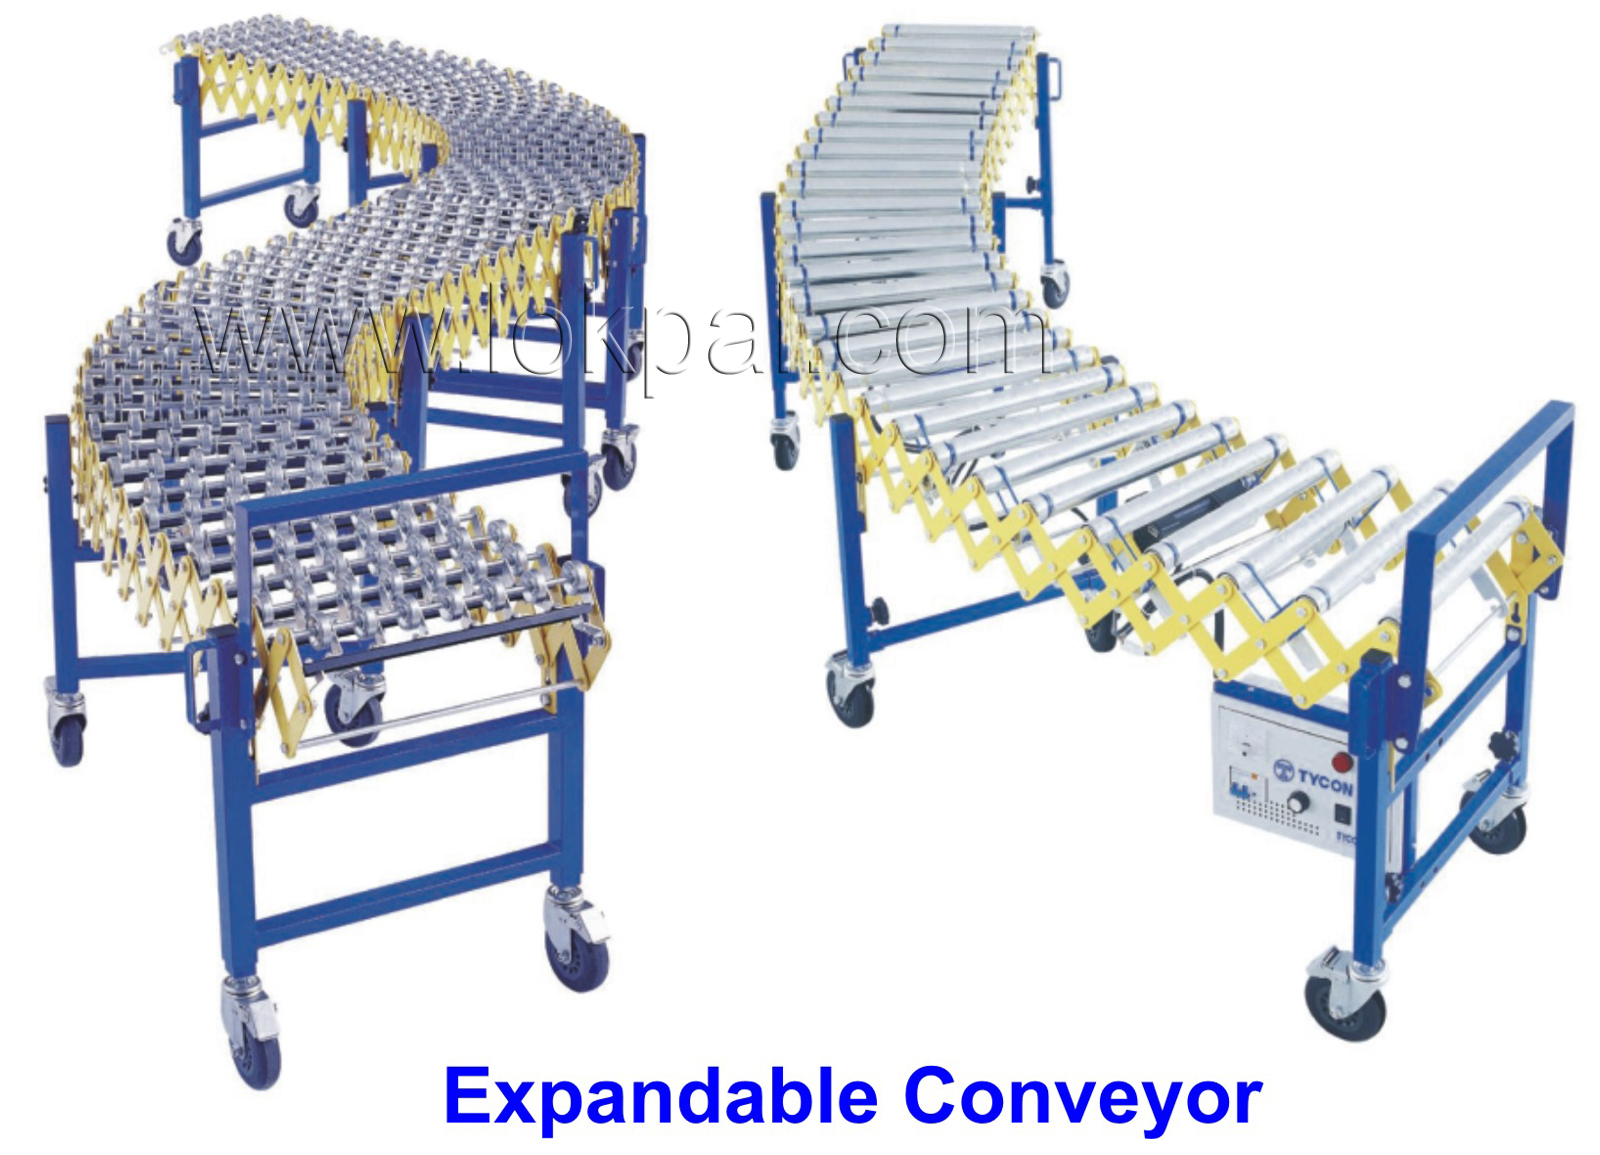 Expandable Conveyor, Expandable Conveyors Wholesalers, Gravity Conveyor, Suppliers, Expandable Conveyors Manufacturers, Expandable Conveyor, Distributor, Wholesaler, Delhi NCR, Noida, India